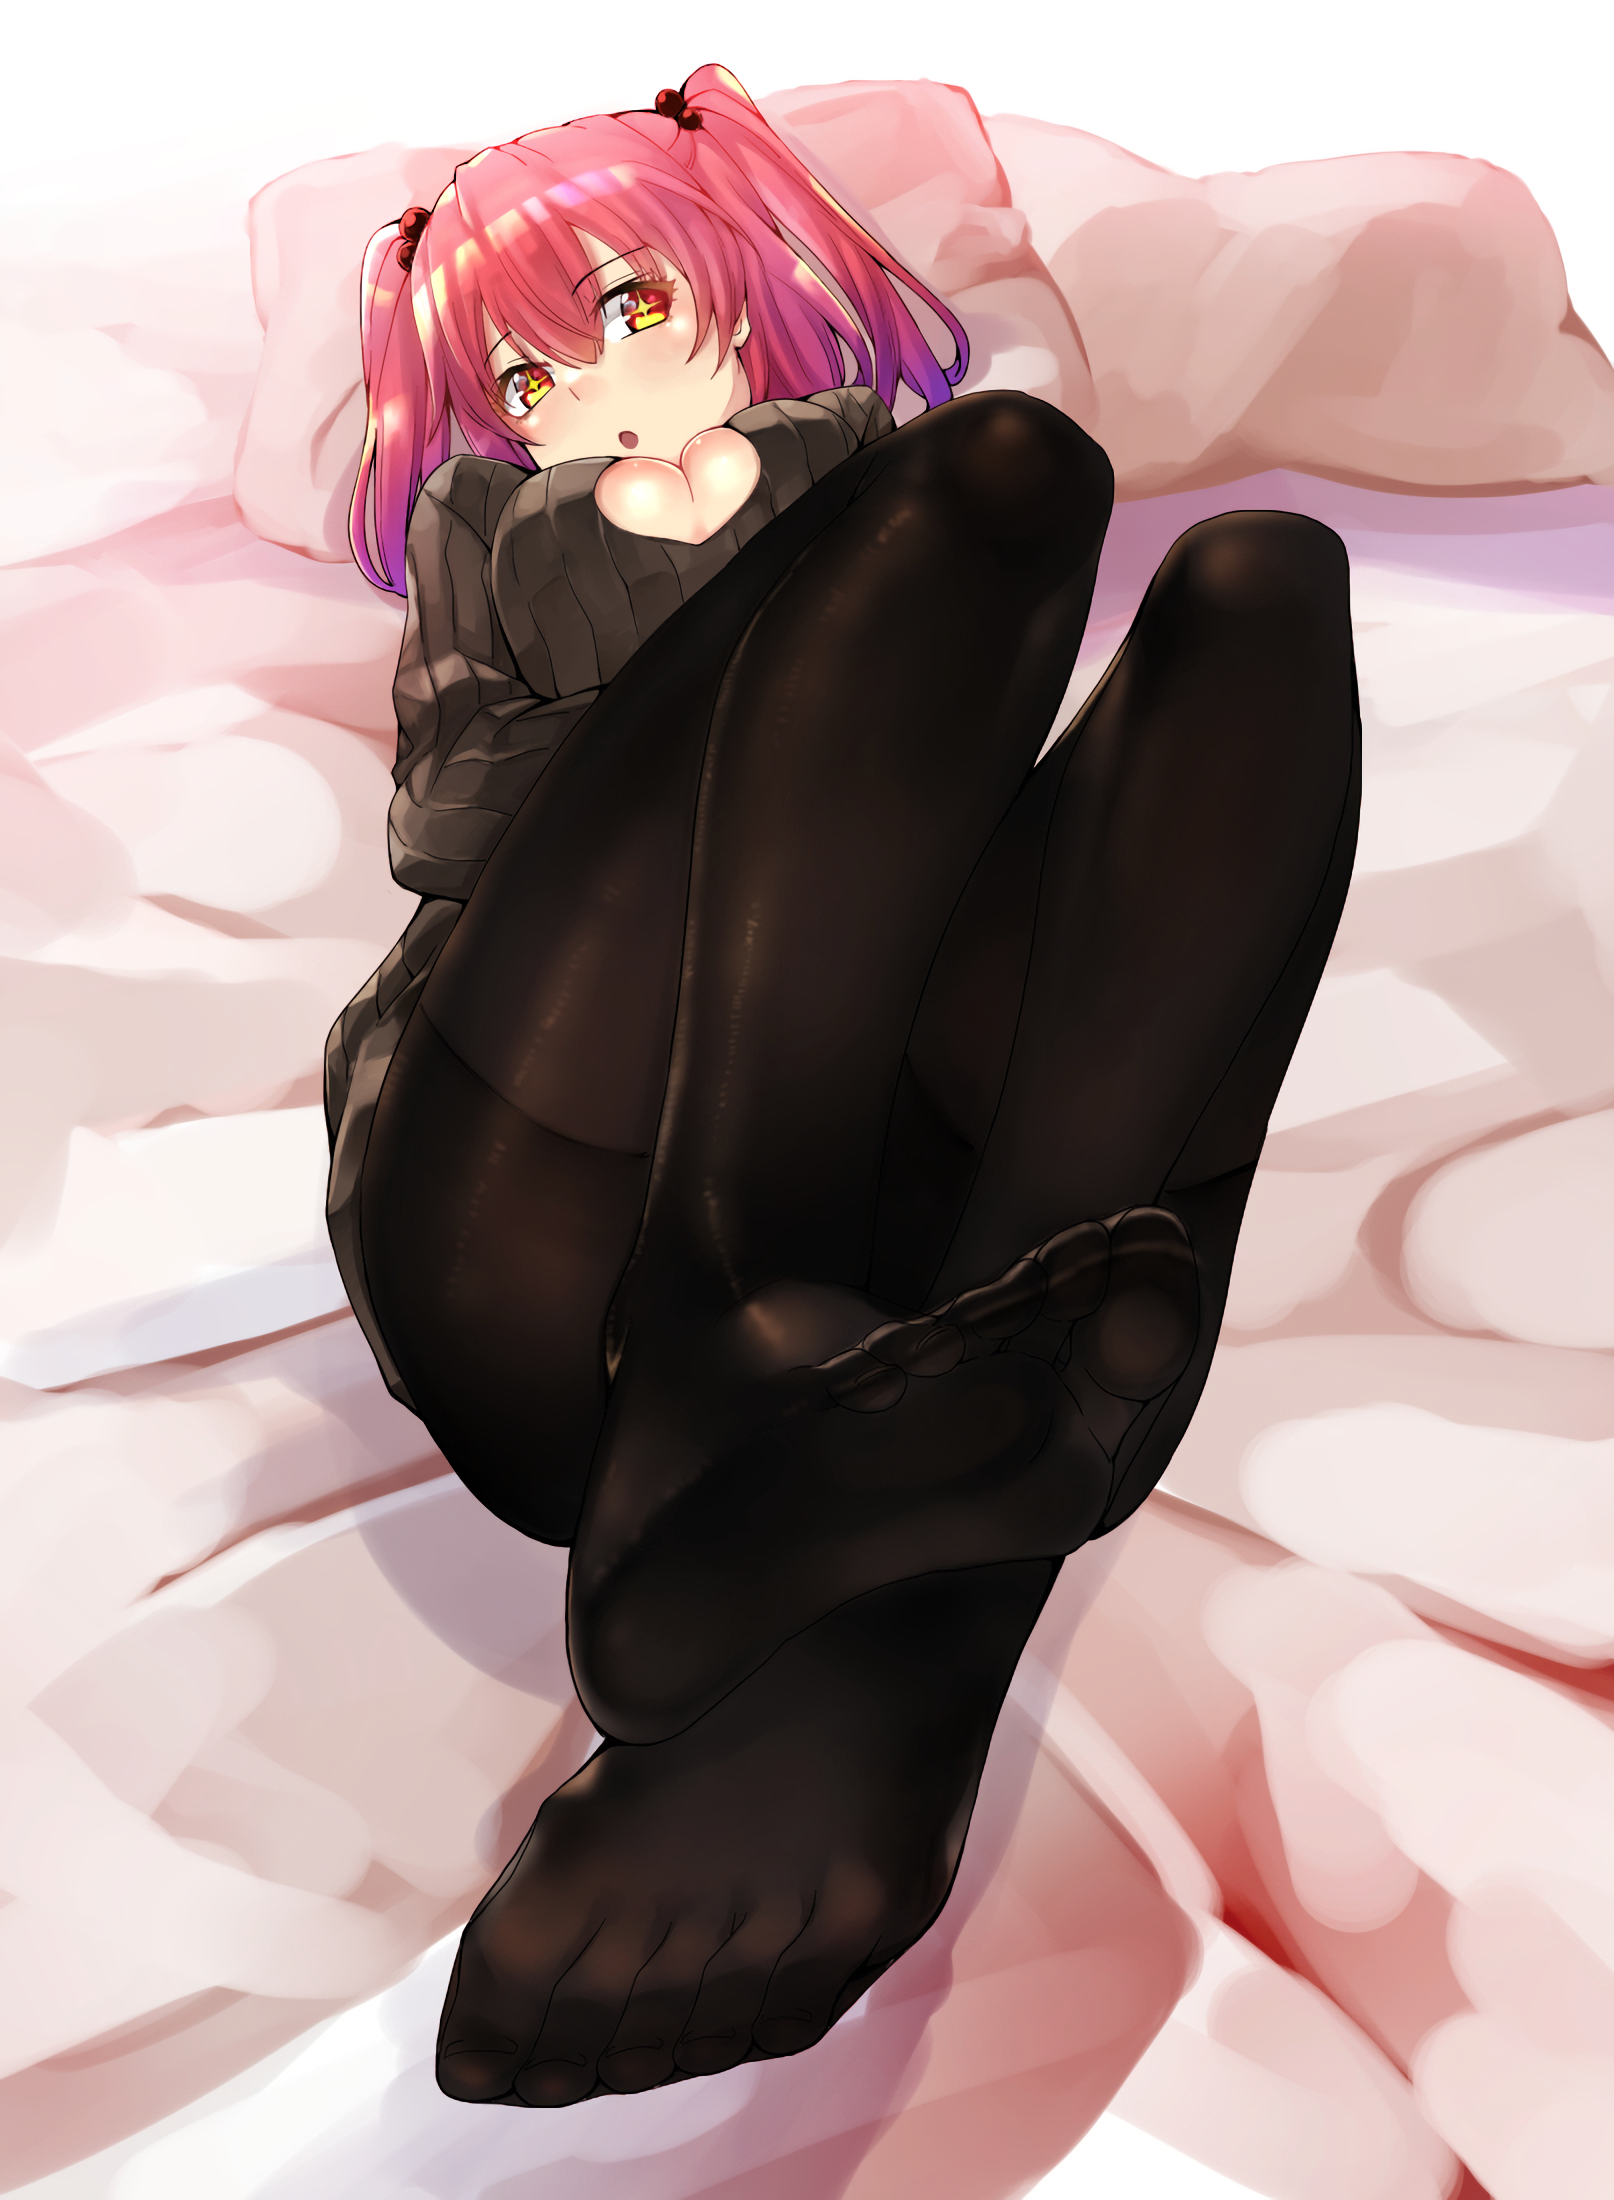 Anime 1614x2200 pantyhose anime girls anime feet sweater cleavage redhead orange eyes in bed lying on back Eiji